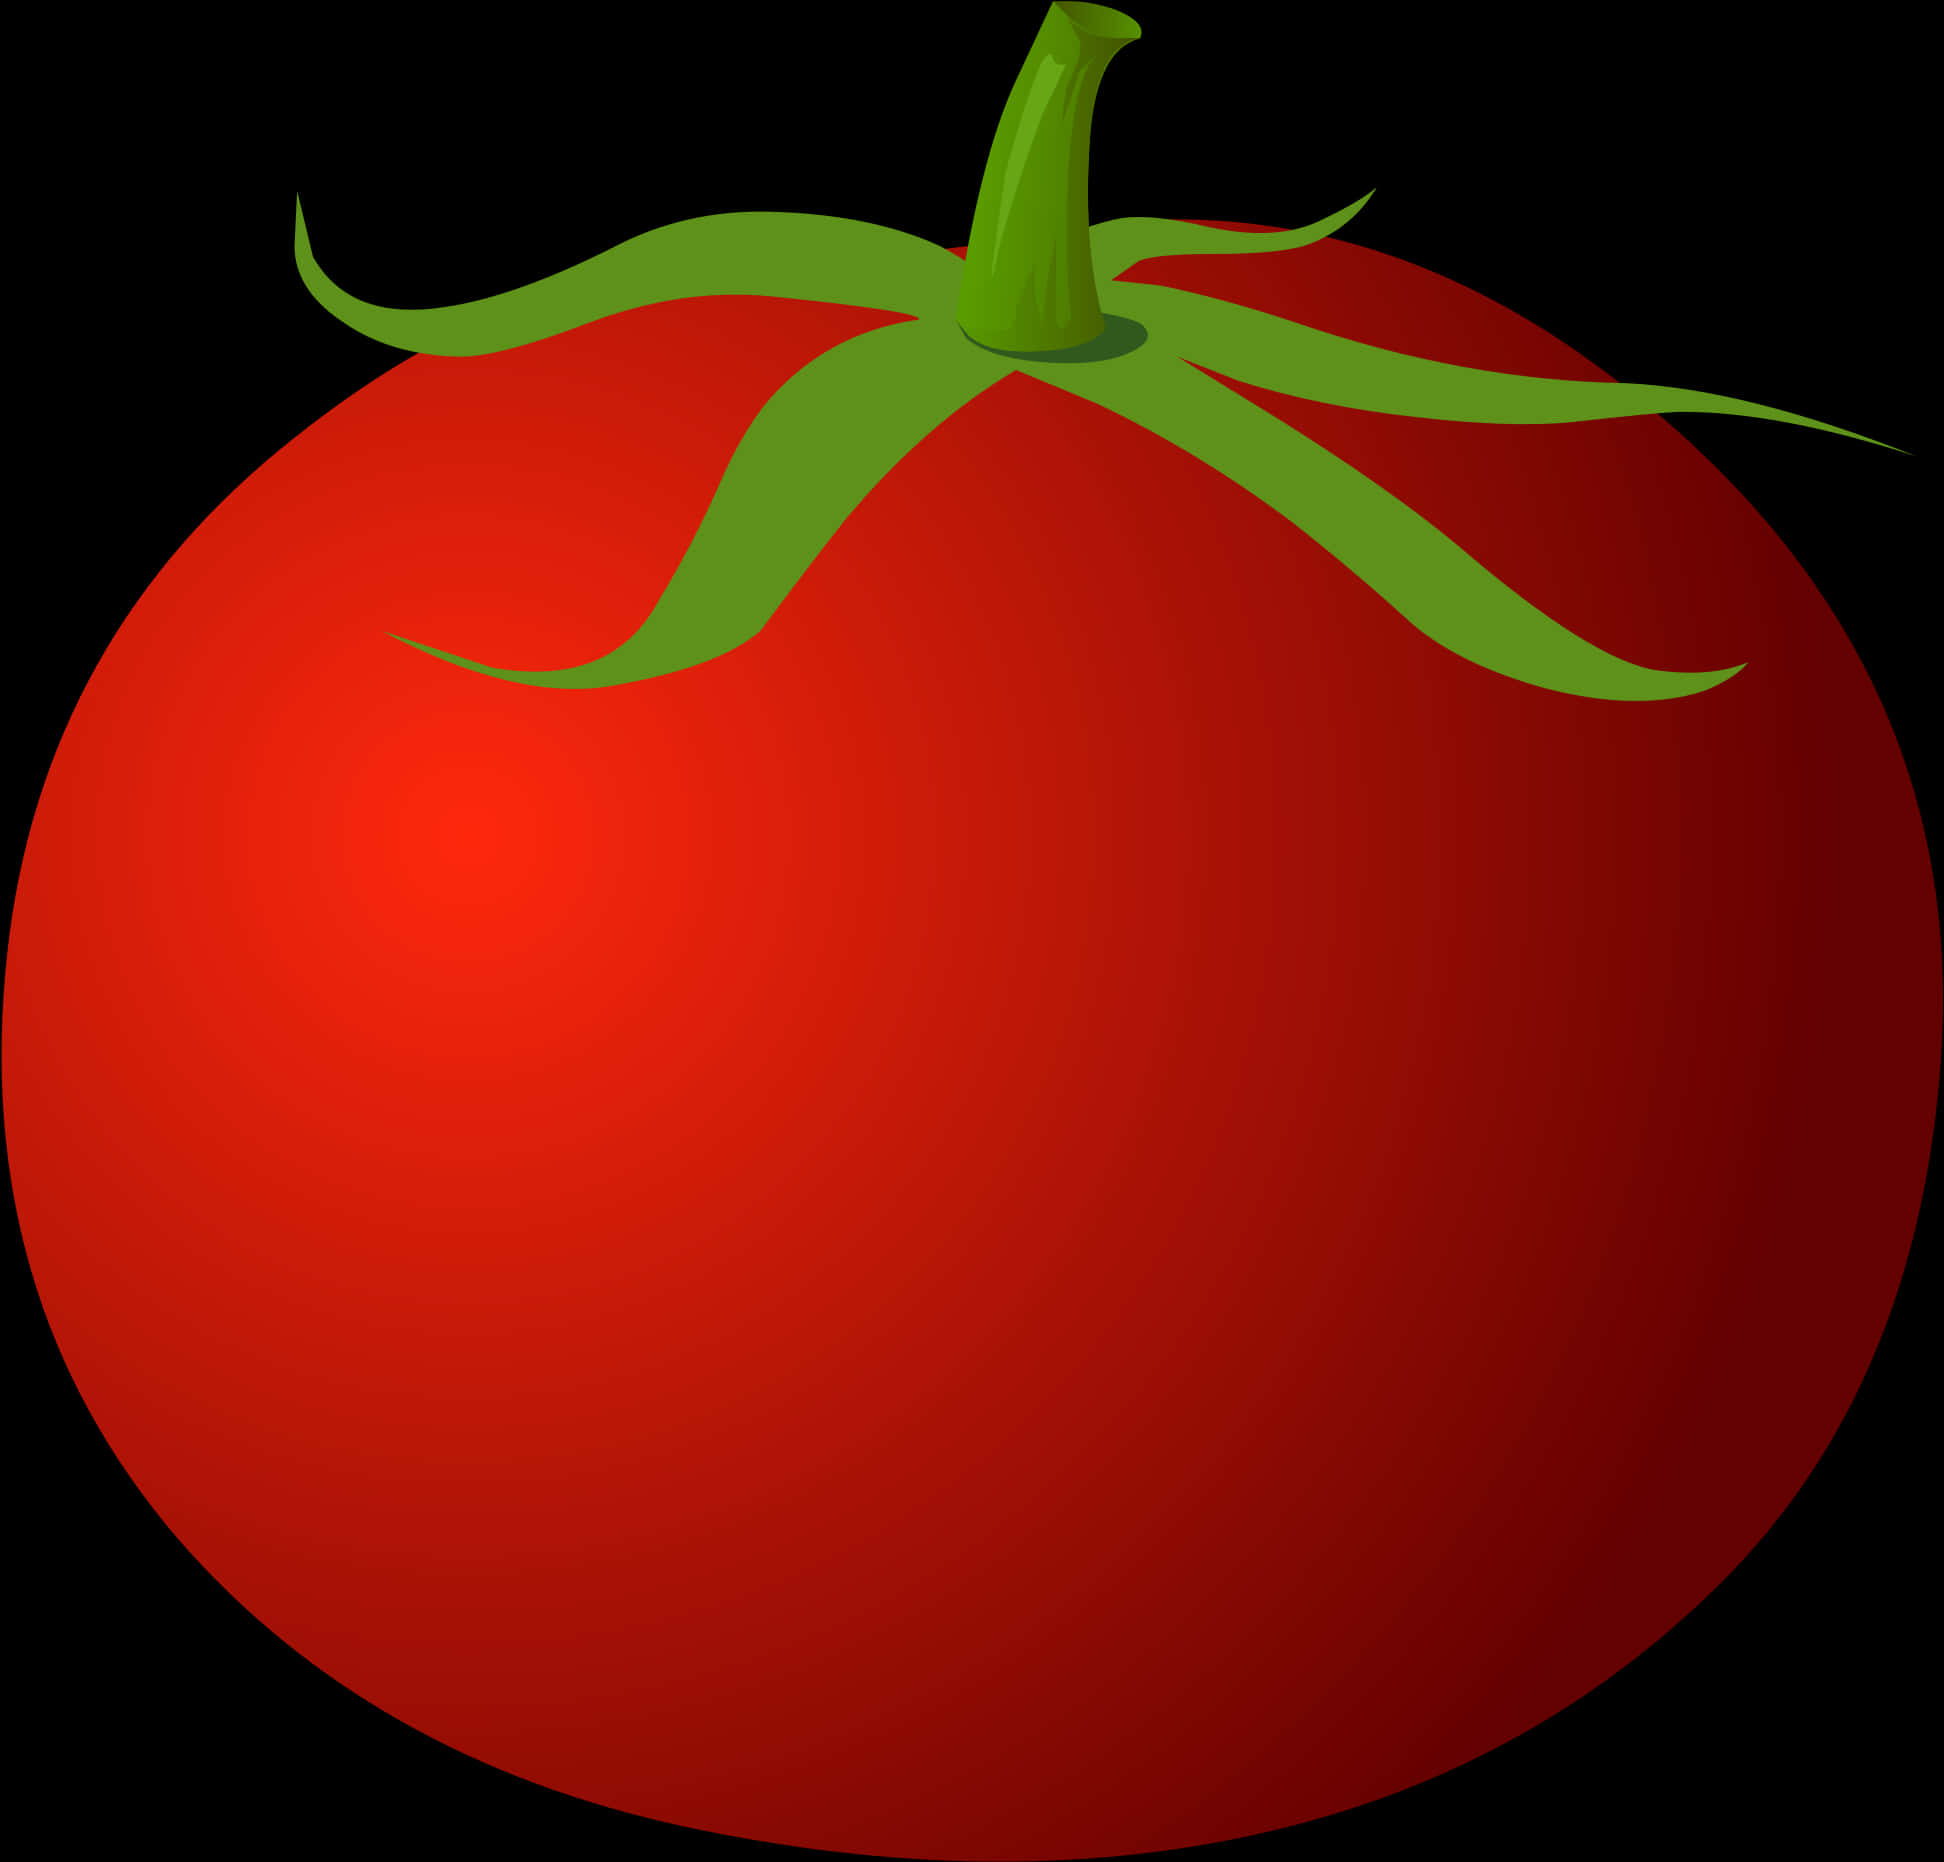 Red Tomato Illustration